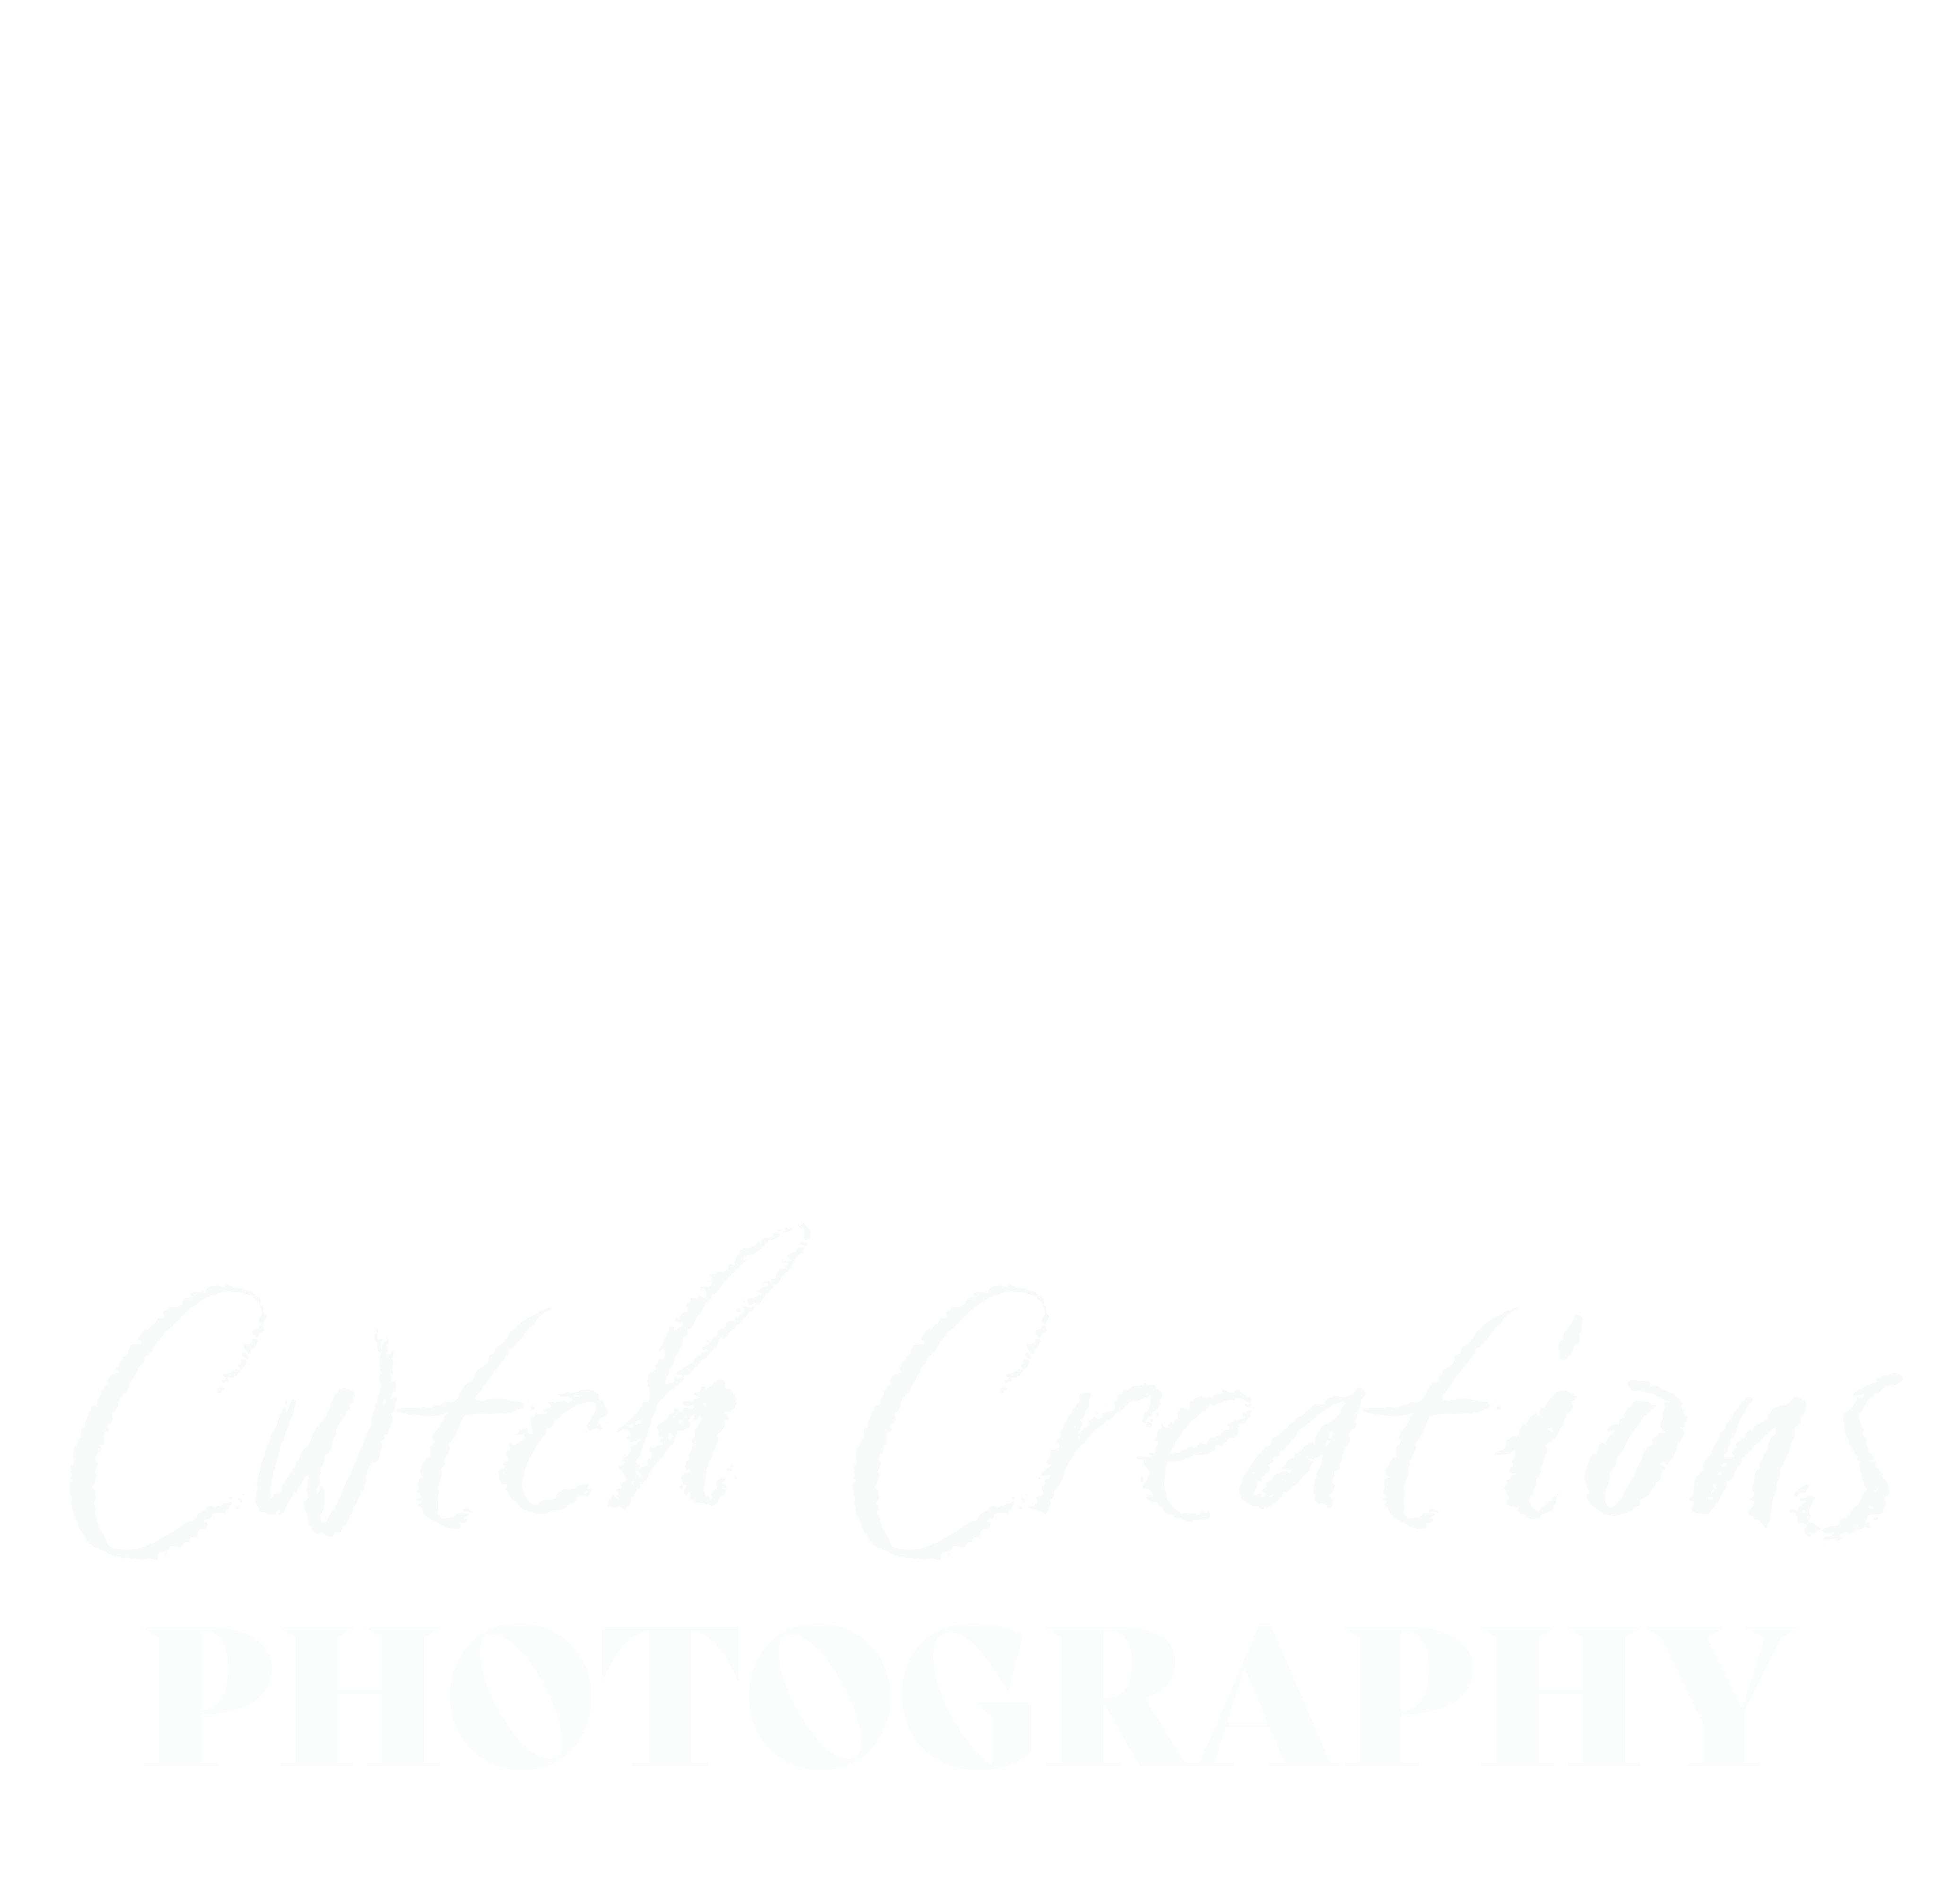 Cwtch Creations